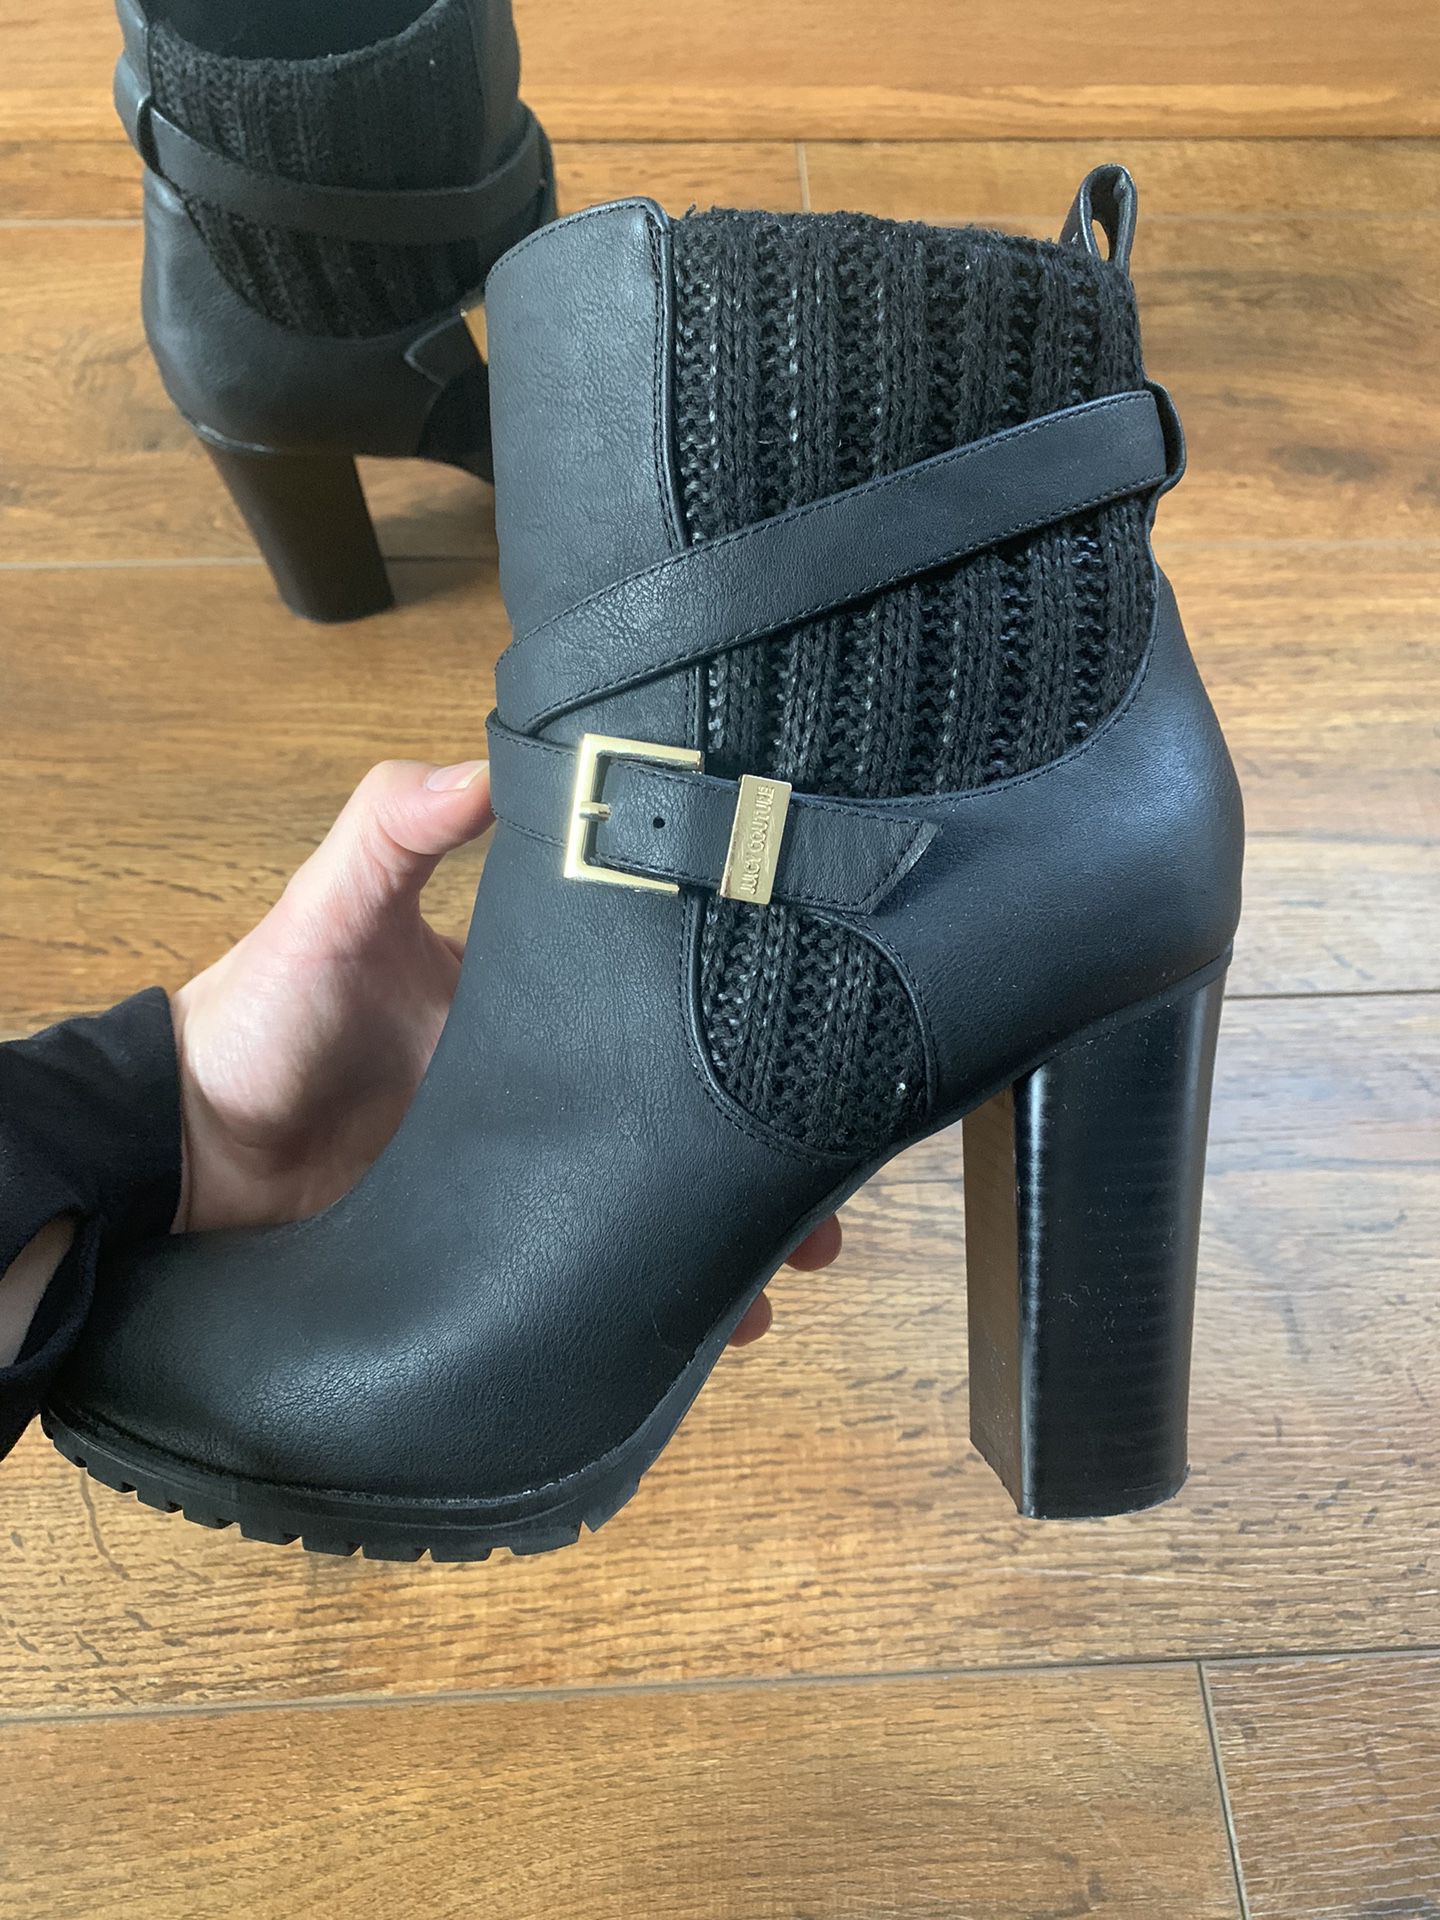 Juicy Couture Black Boots Size 9.5 Women 